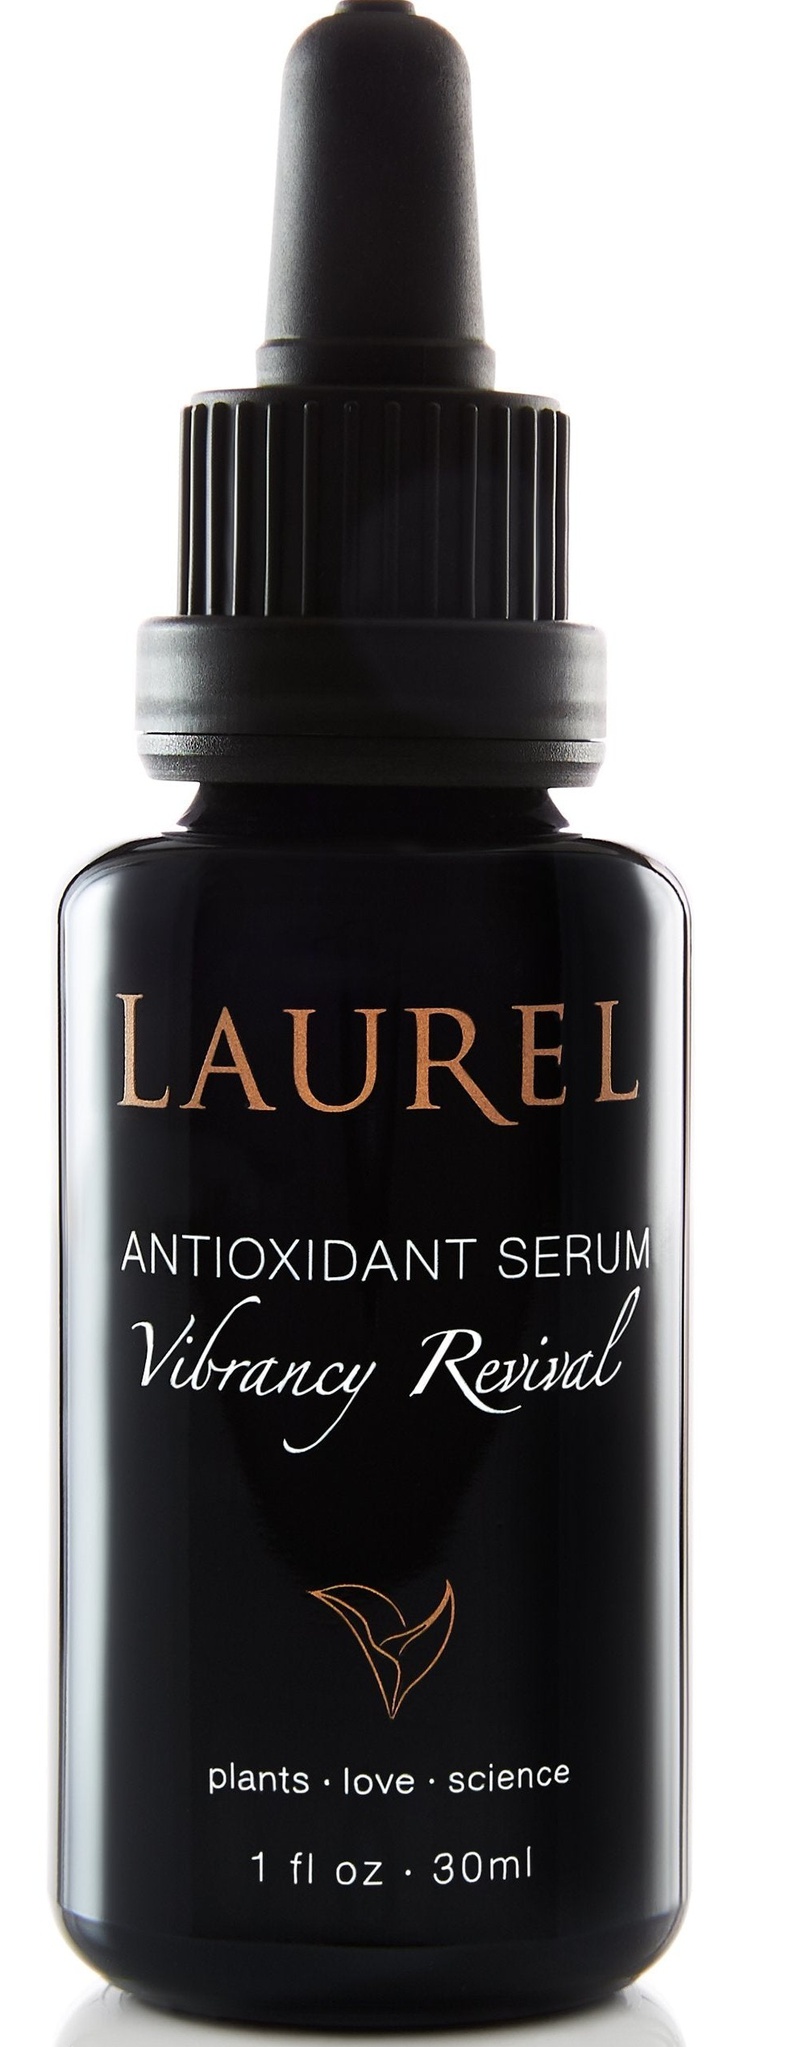 Laurel Antioxidant Serum Vibrancy Revival